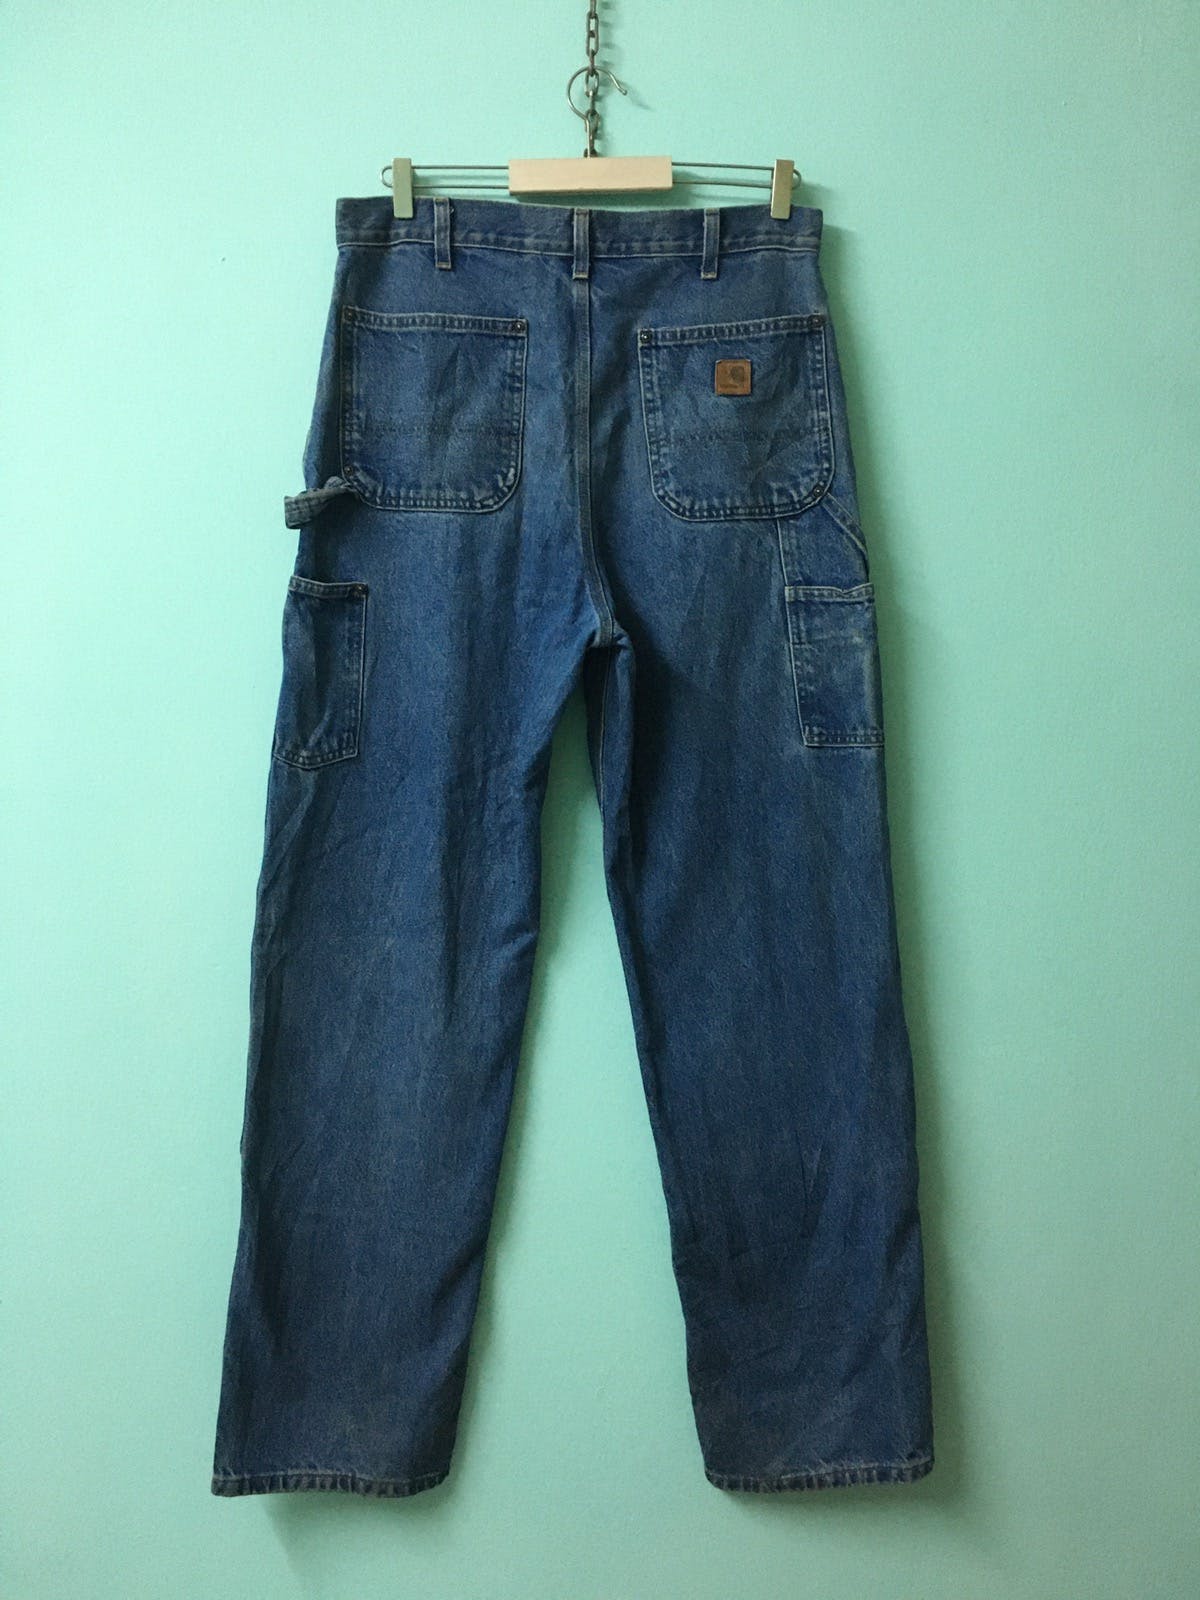 Carharrt double knee jeans - 6